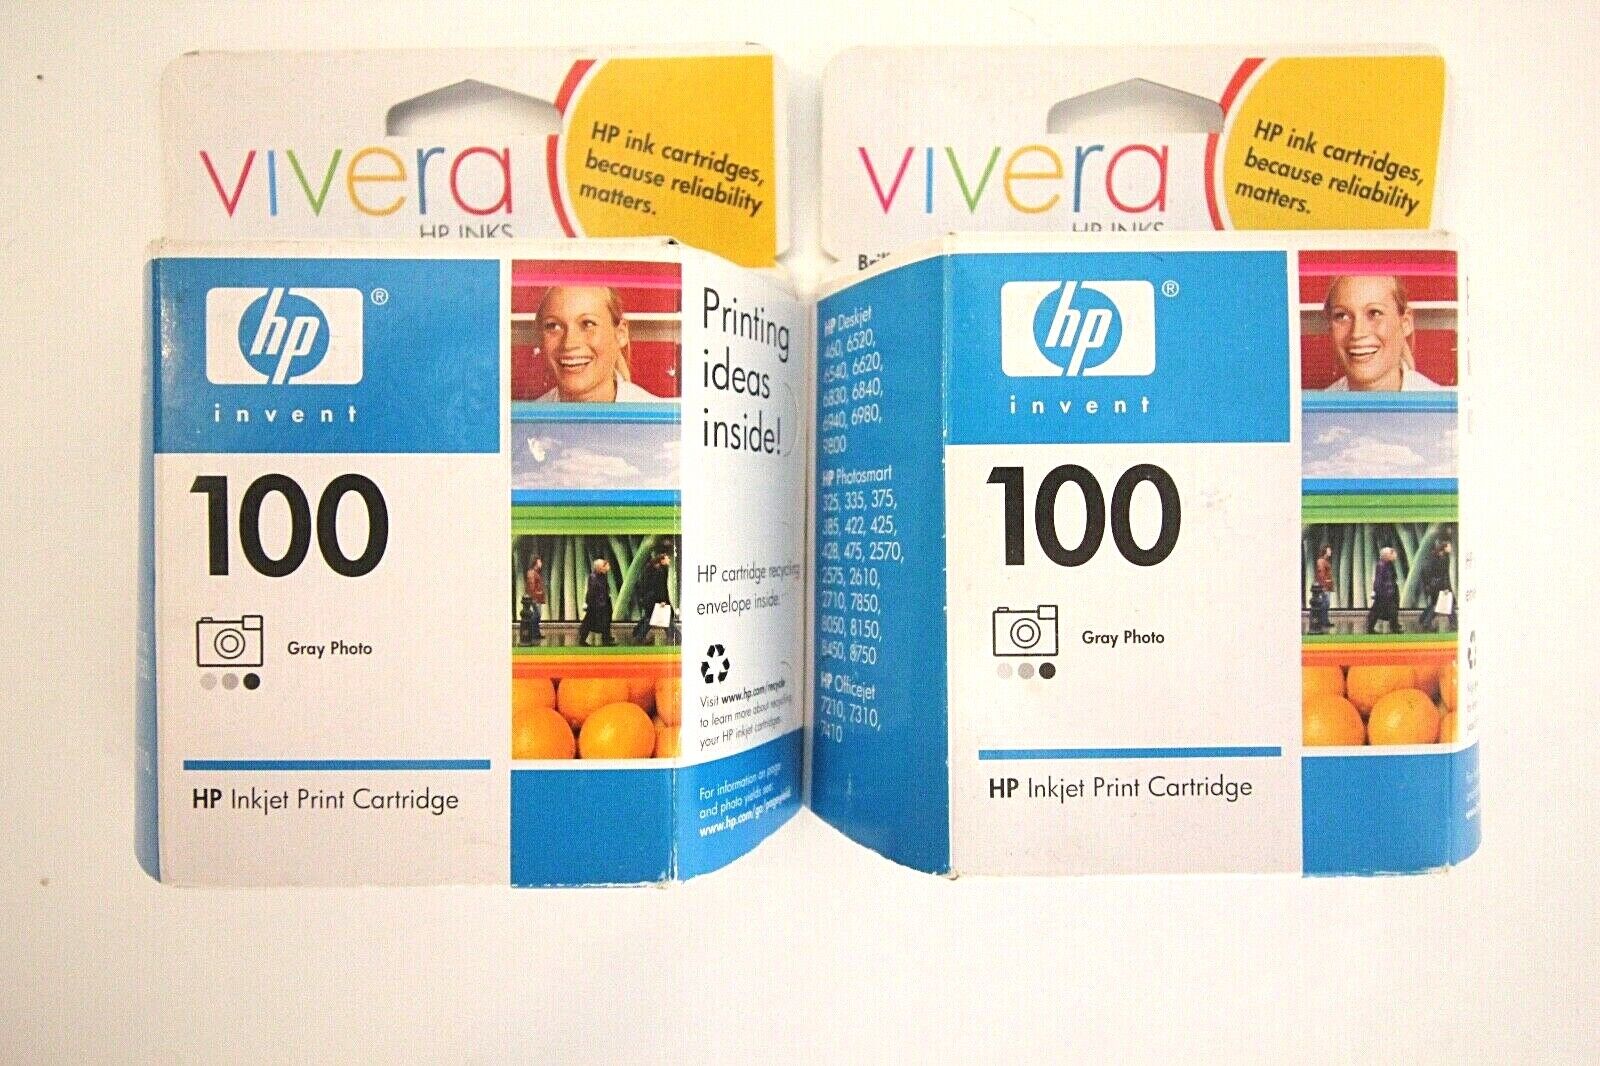 HP Vivera 100 Gray Photo Ink cartridge Exp 10/2006 Set of 2 Cartridges